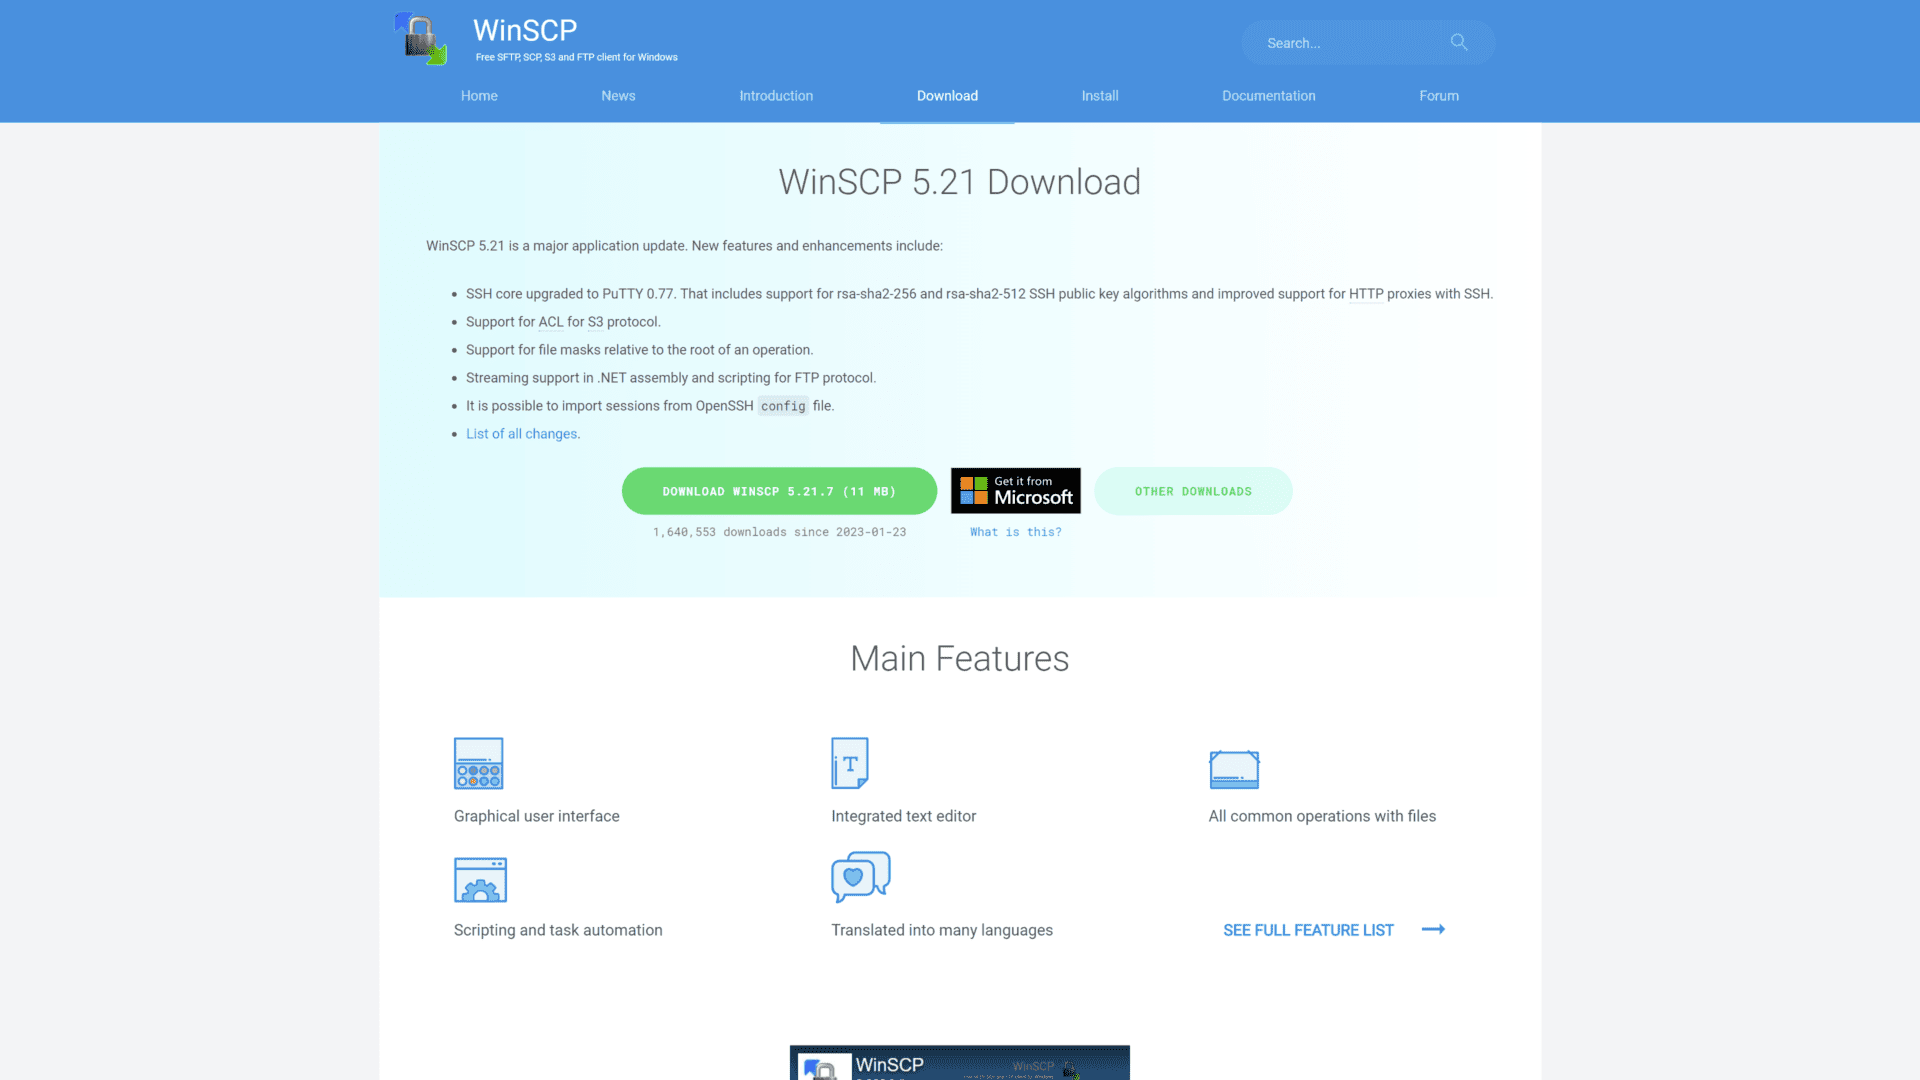 winscp homepage screenshot 1